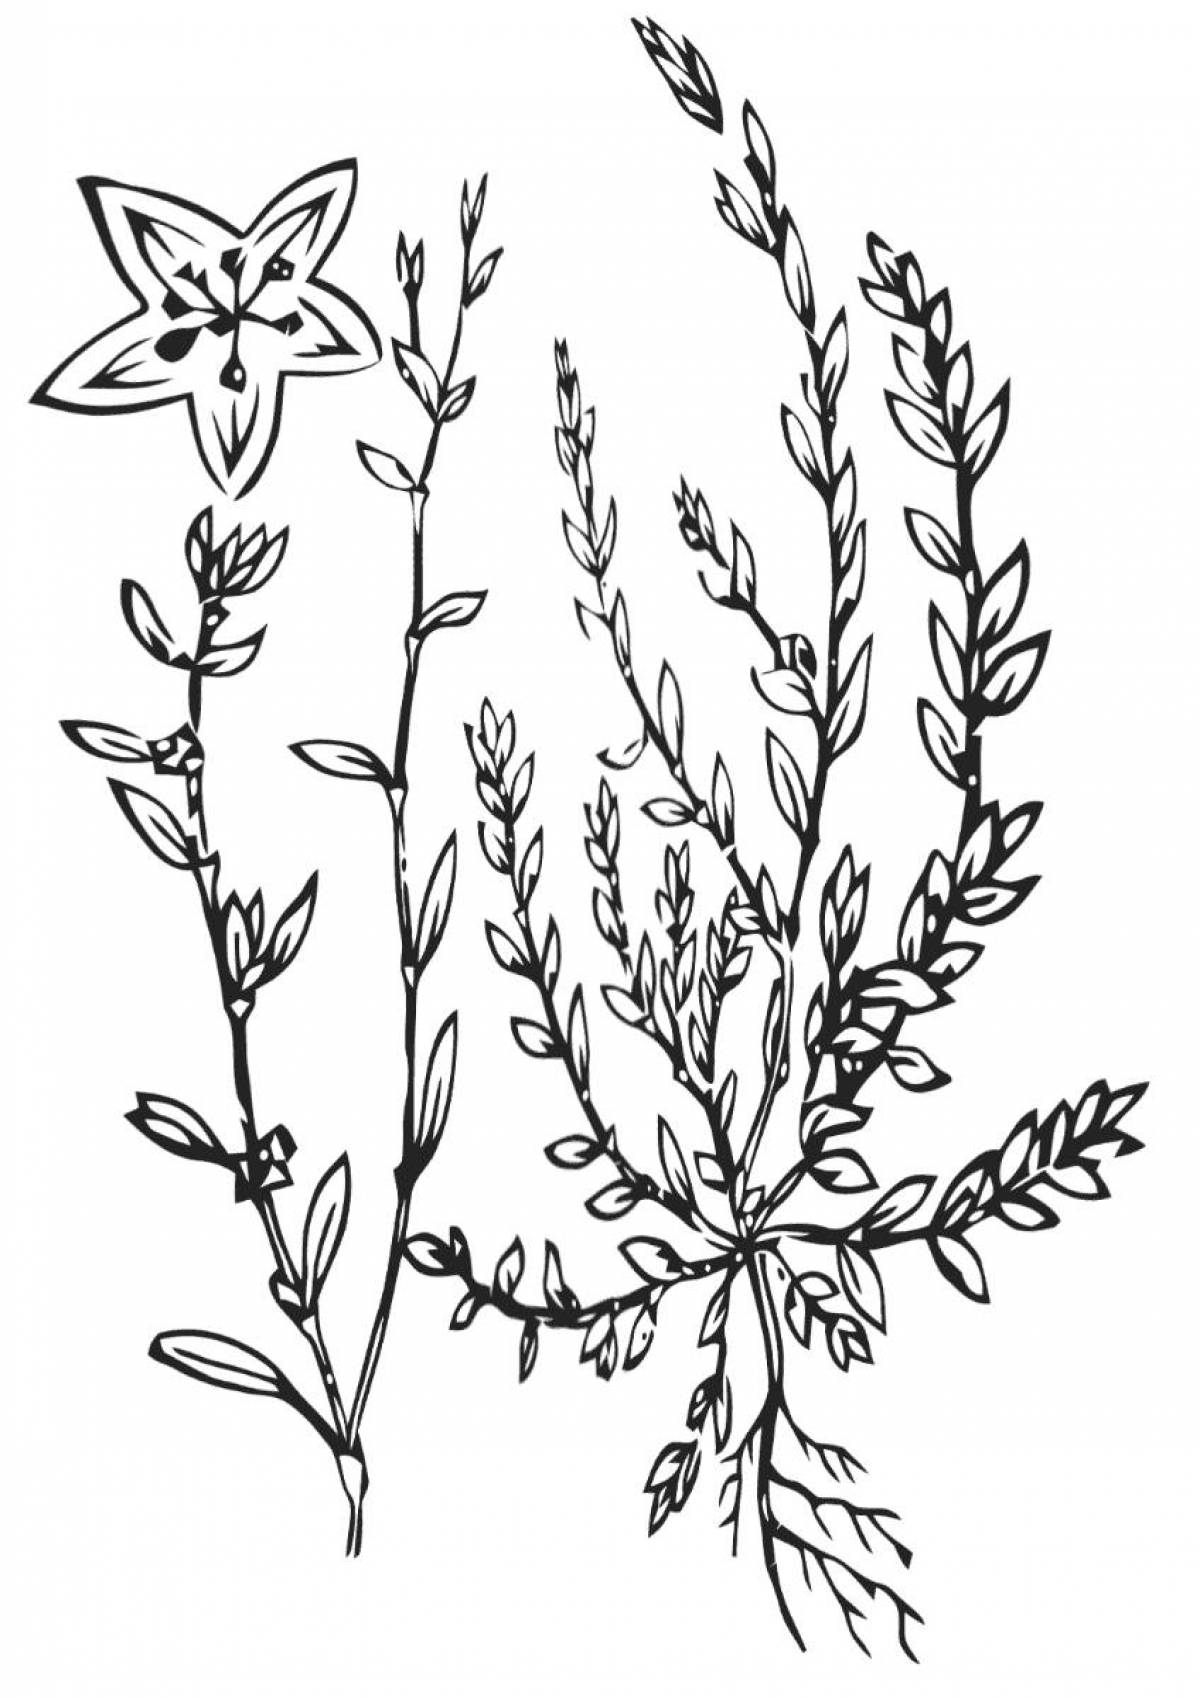 Flax plant